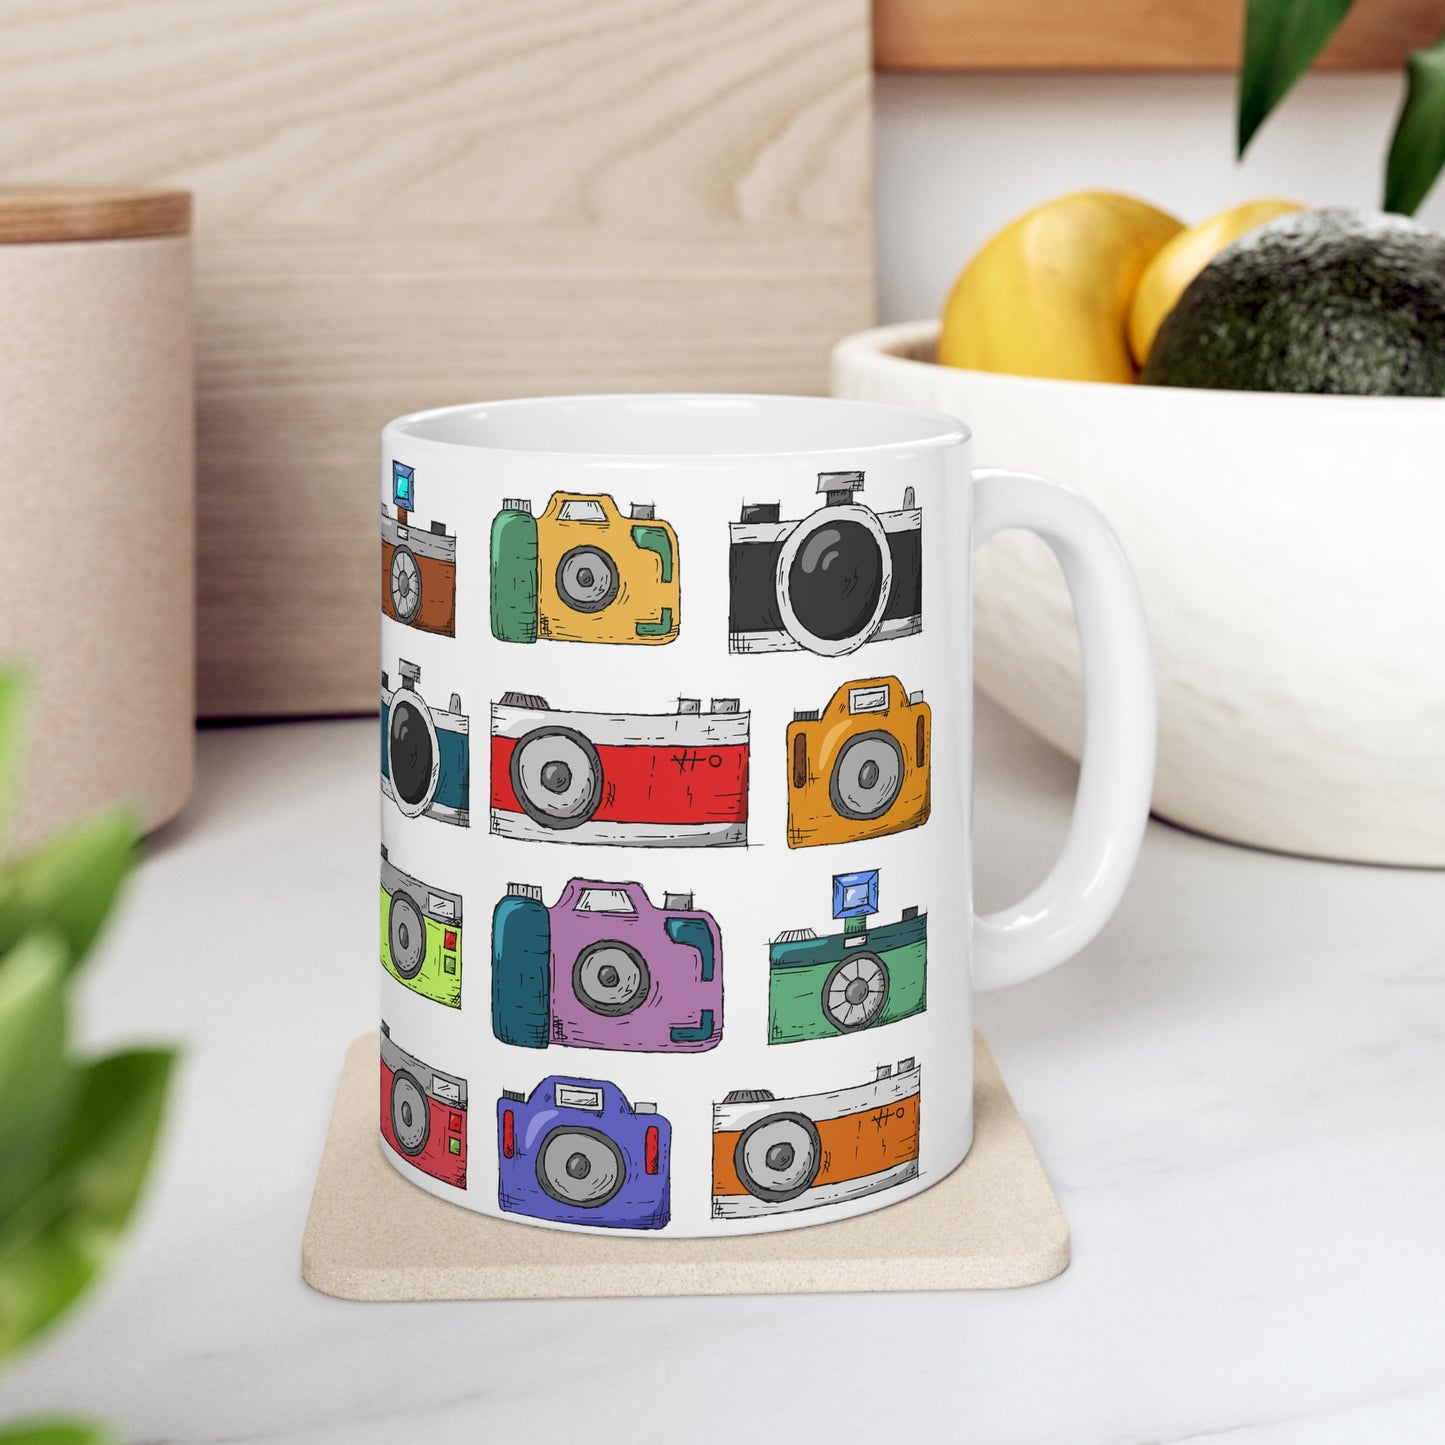 Capture Memories with Our Camera Variety Mug! #Mug #Camera #Photo